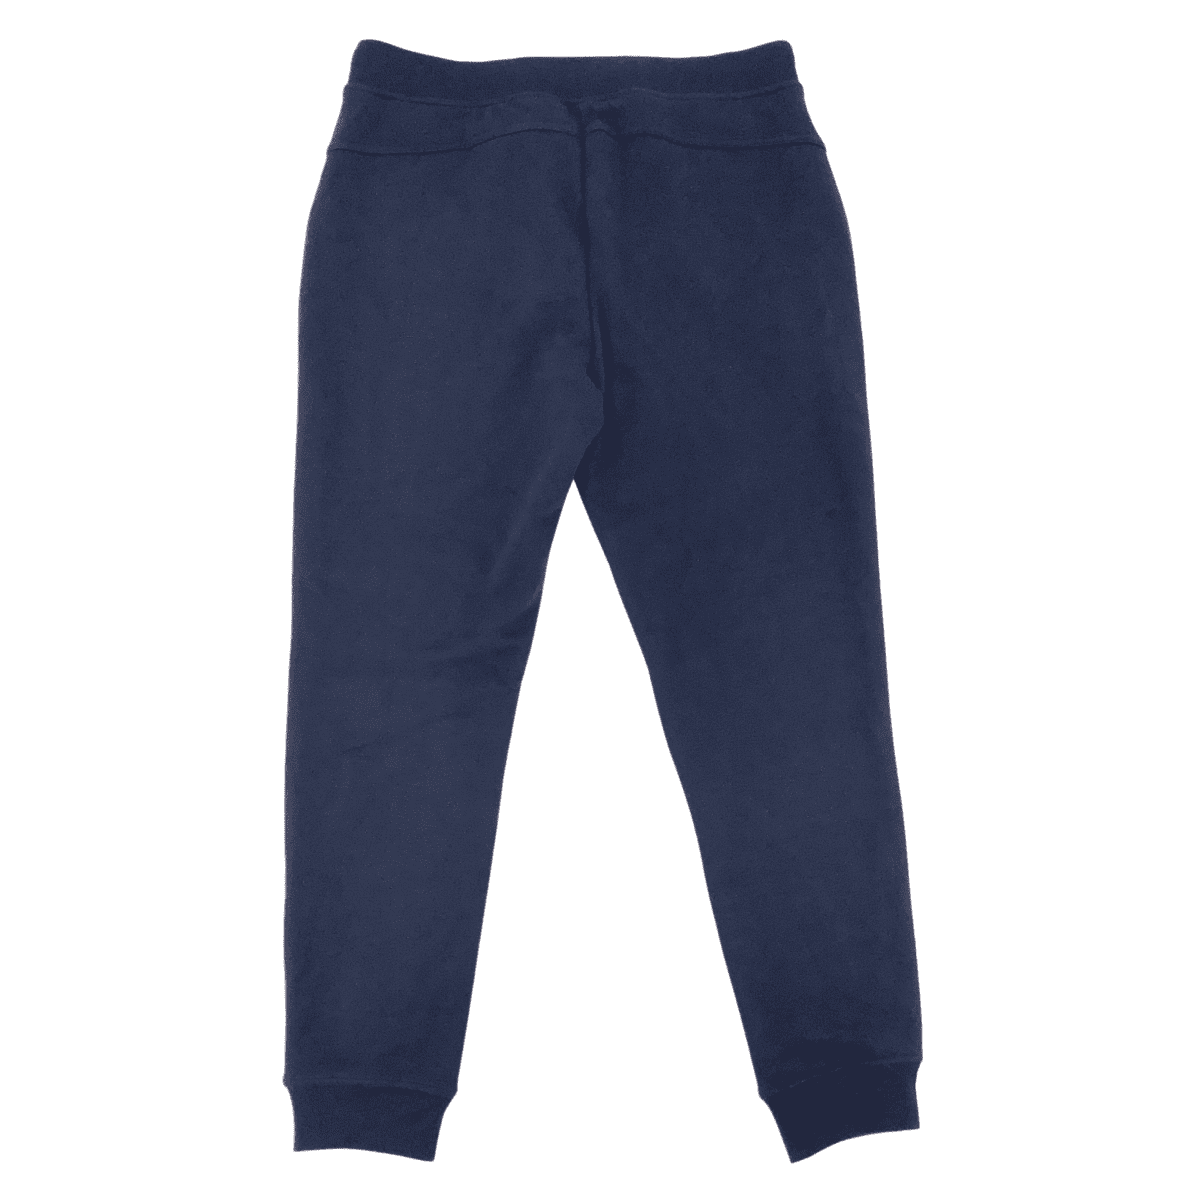 Fila Men's Navy Sweatpants 02